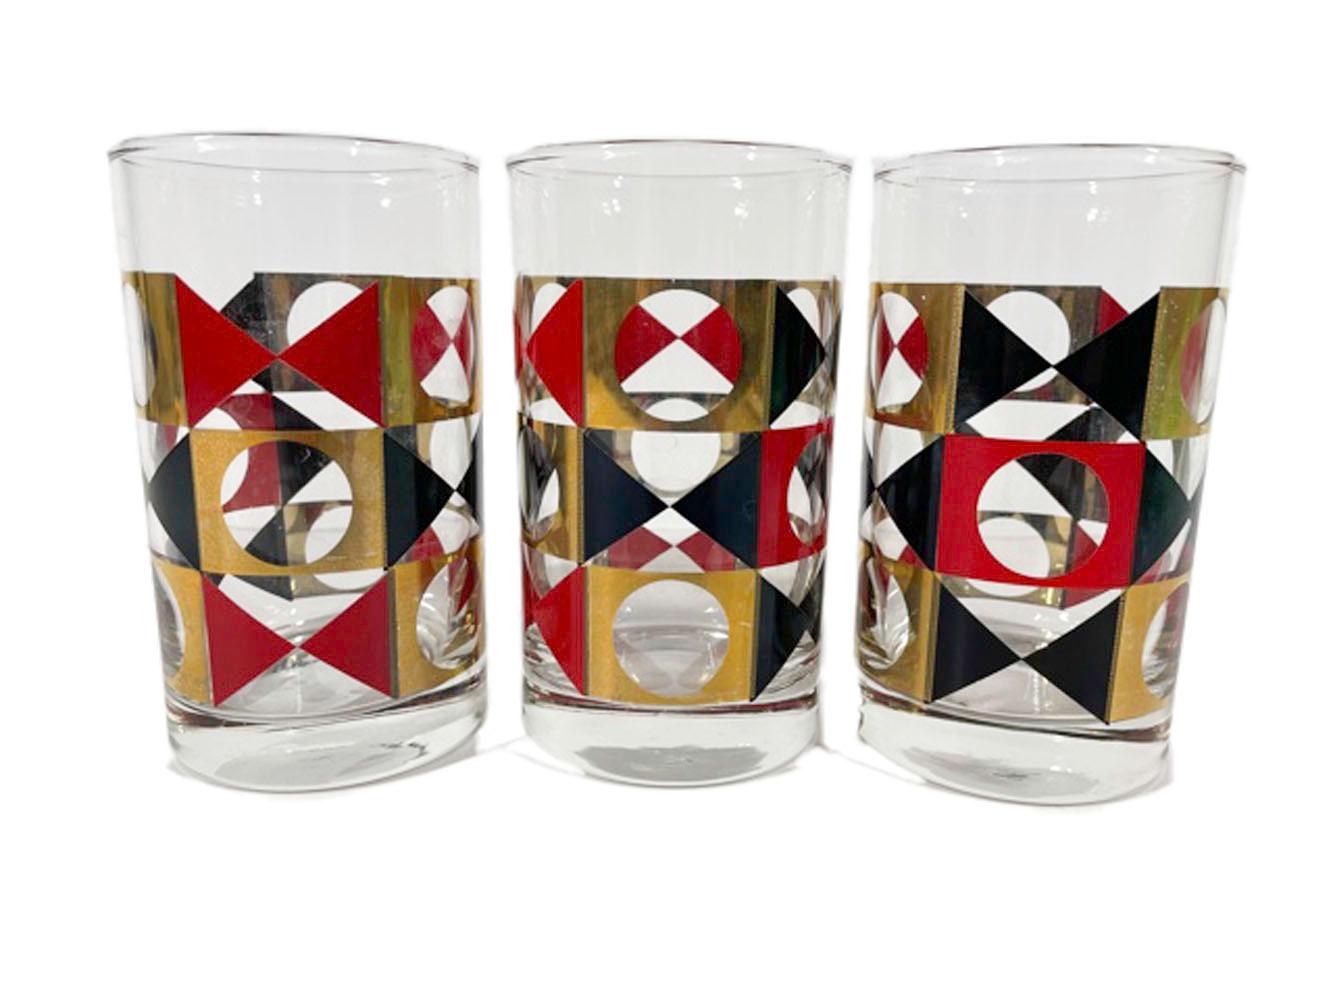 Set of 6 Vintage Geometric Cocktail Glasses in Red & Black Enamel with 22k Gold For Sale 3